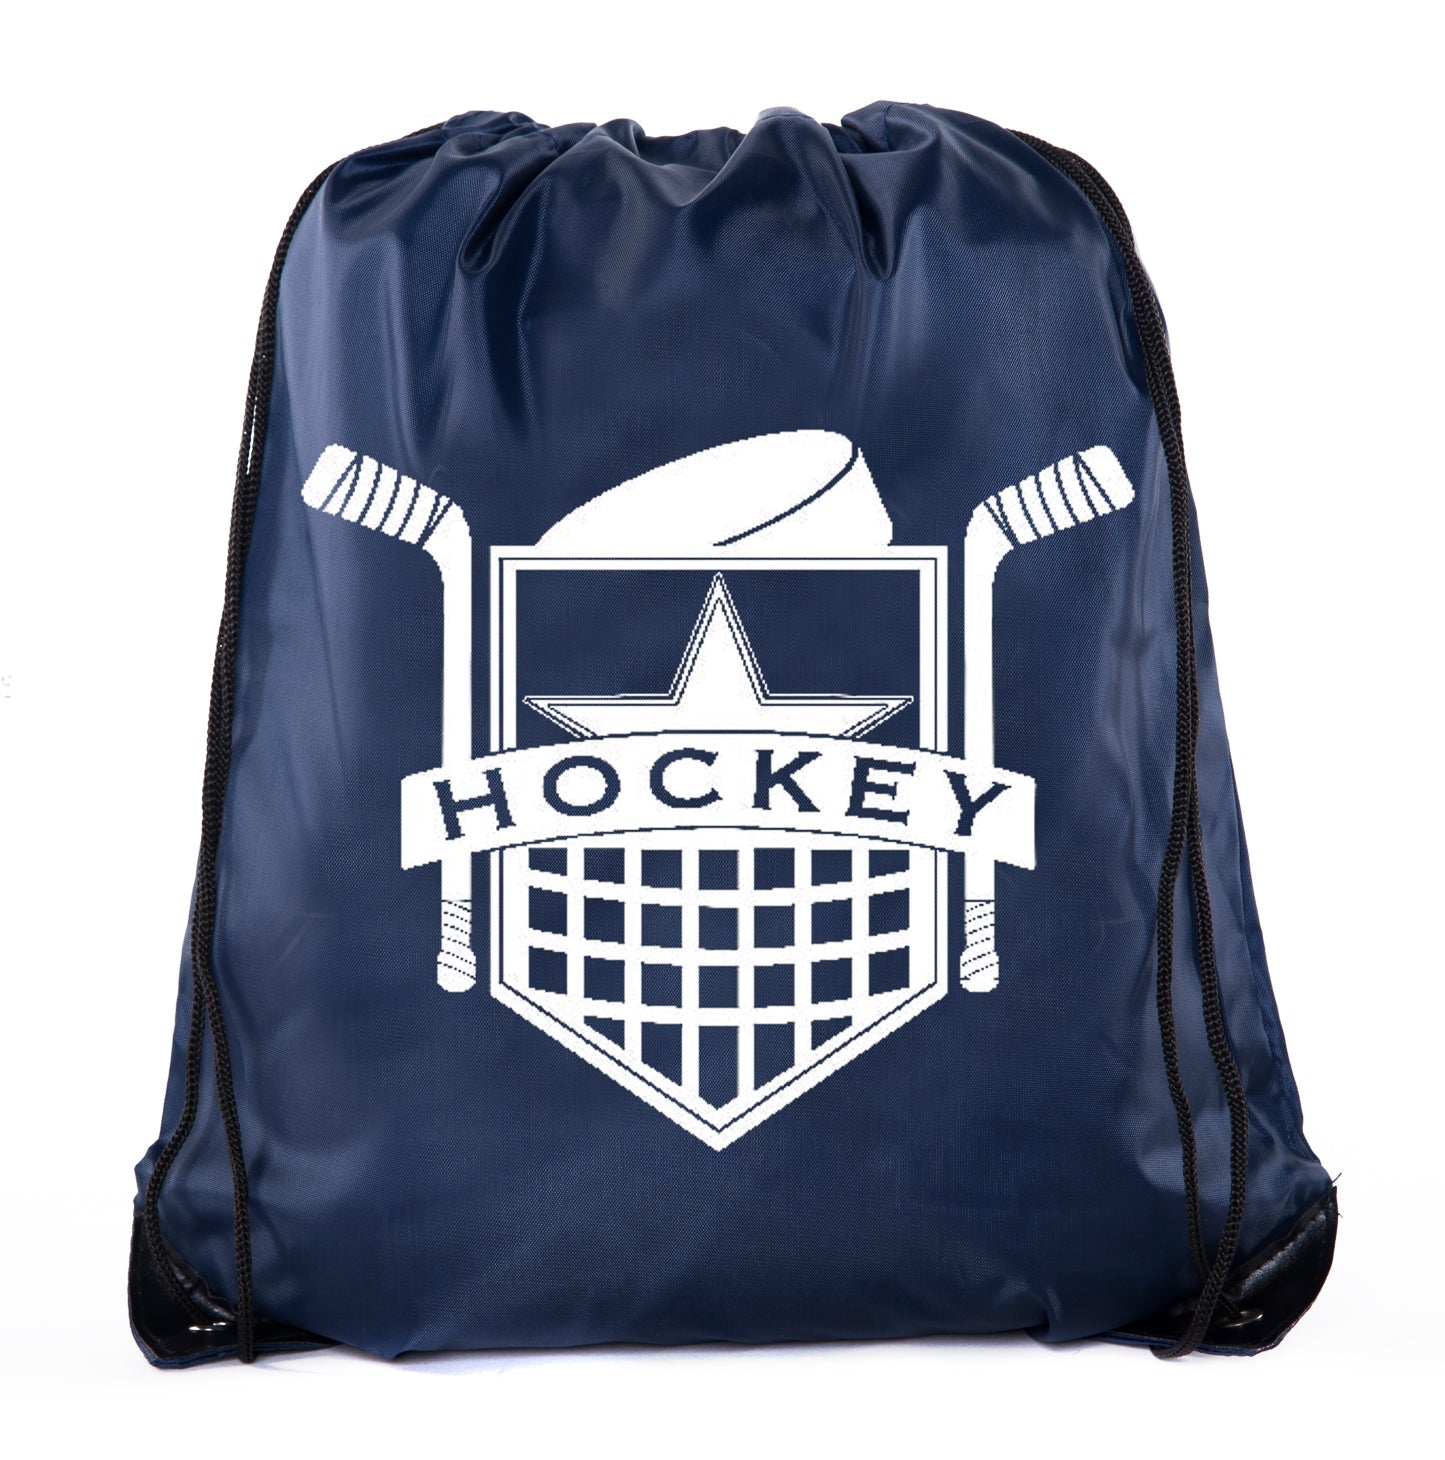 Hockey Puck & Sticks Polyester Drawstring Bag - Mato & Hash